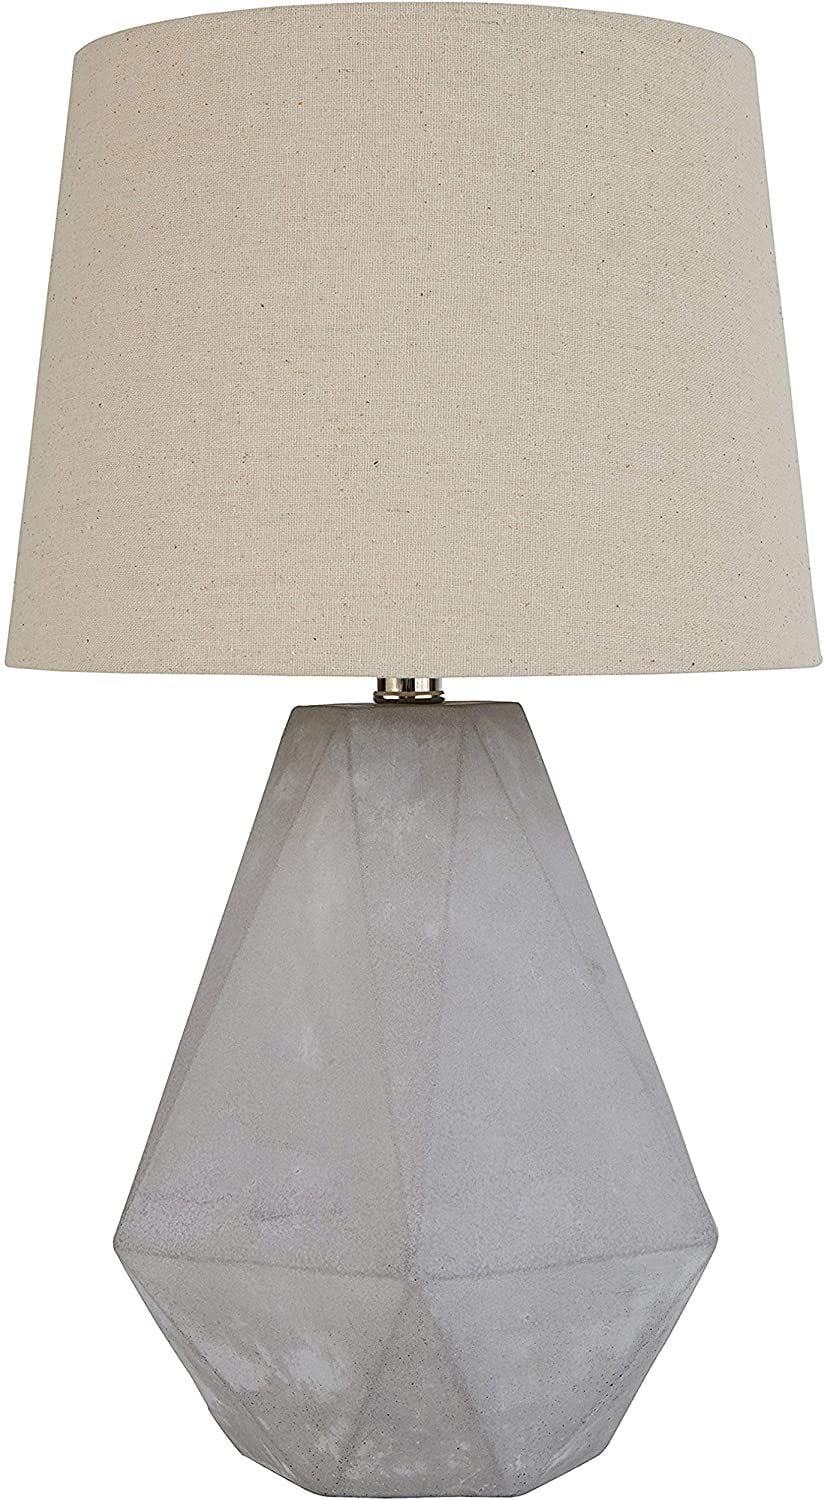 Midcentury Modern Diamond Cut Concrete Table Lamp, as featured in IKEA's 2021 Big Winter Sale.